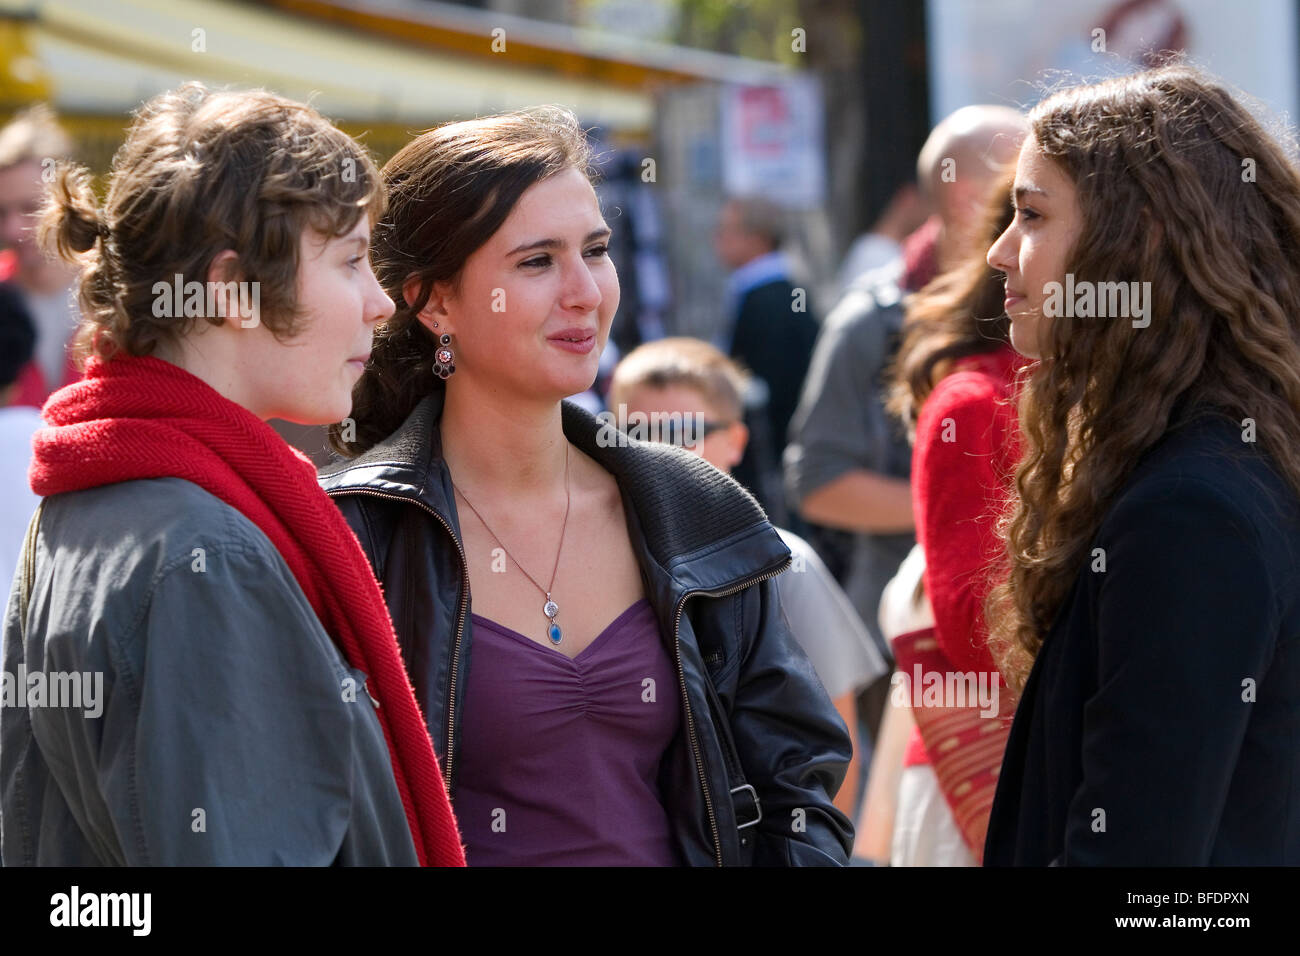 Estudiantes franceses socializar en la Place Saint-Michel, París, Francia. Foto de stock